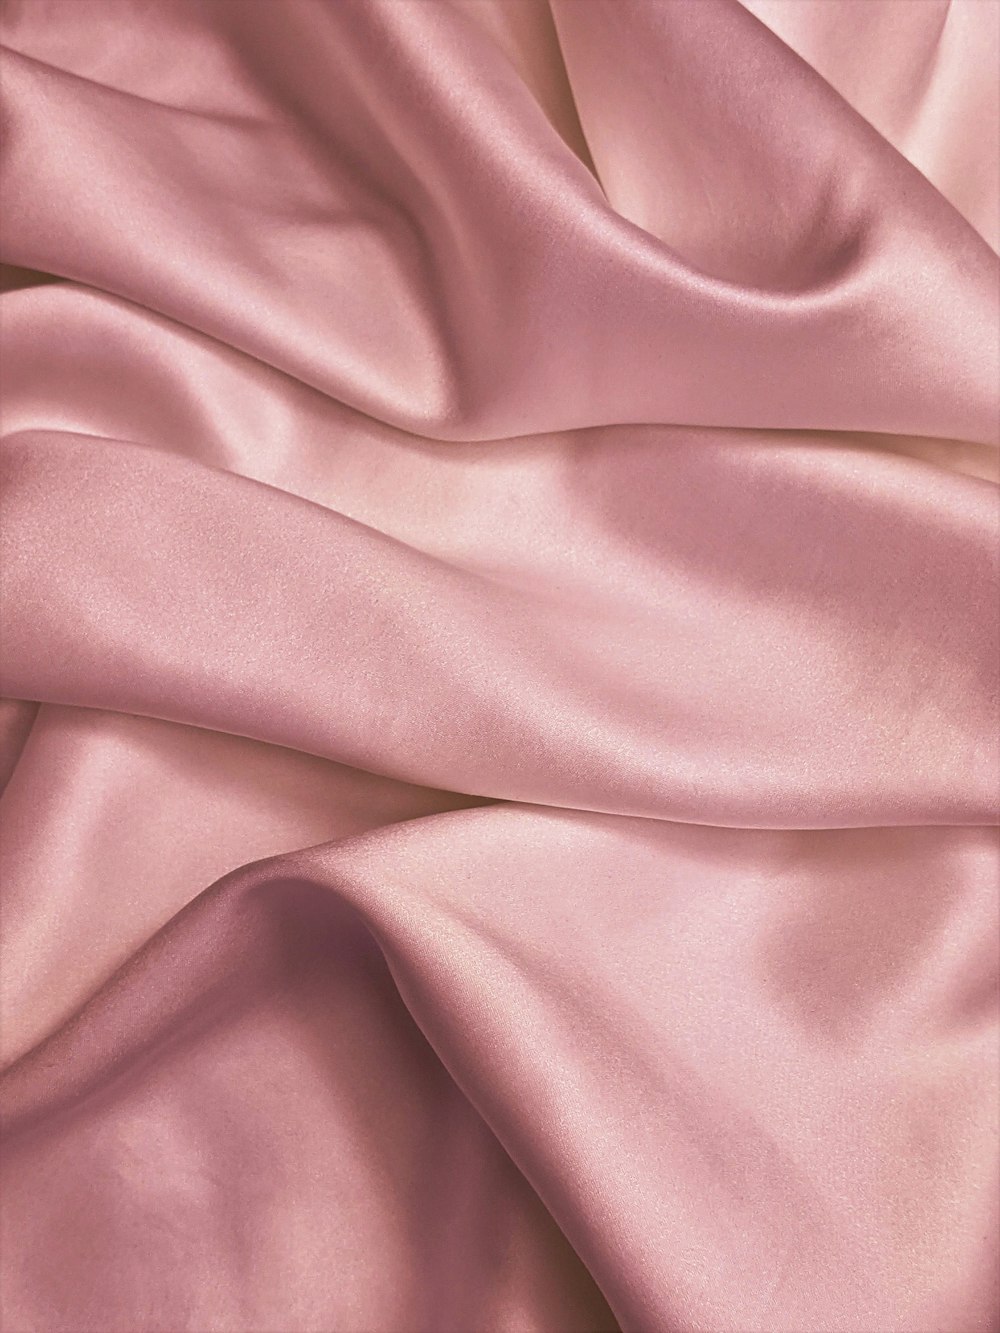 tessuto rosa in fotografia ravvicinata